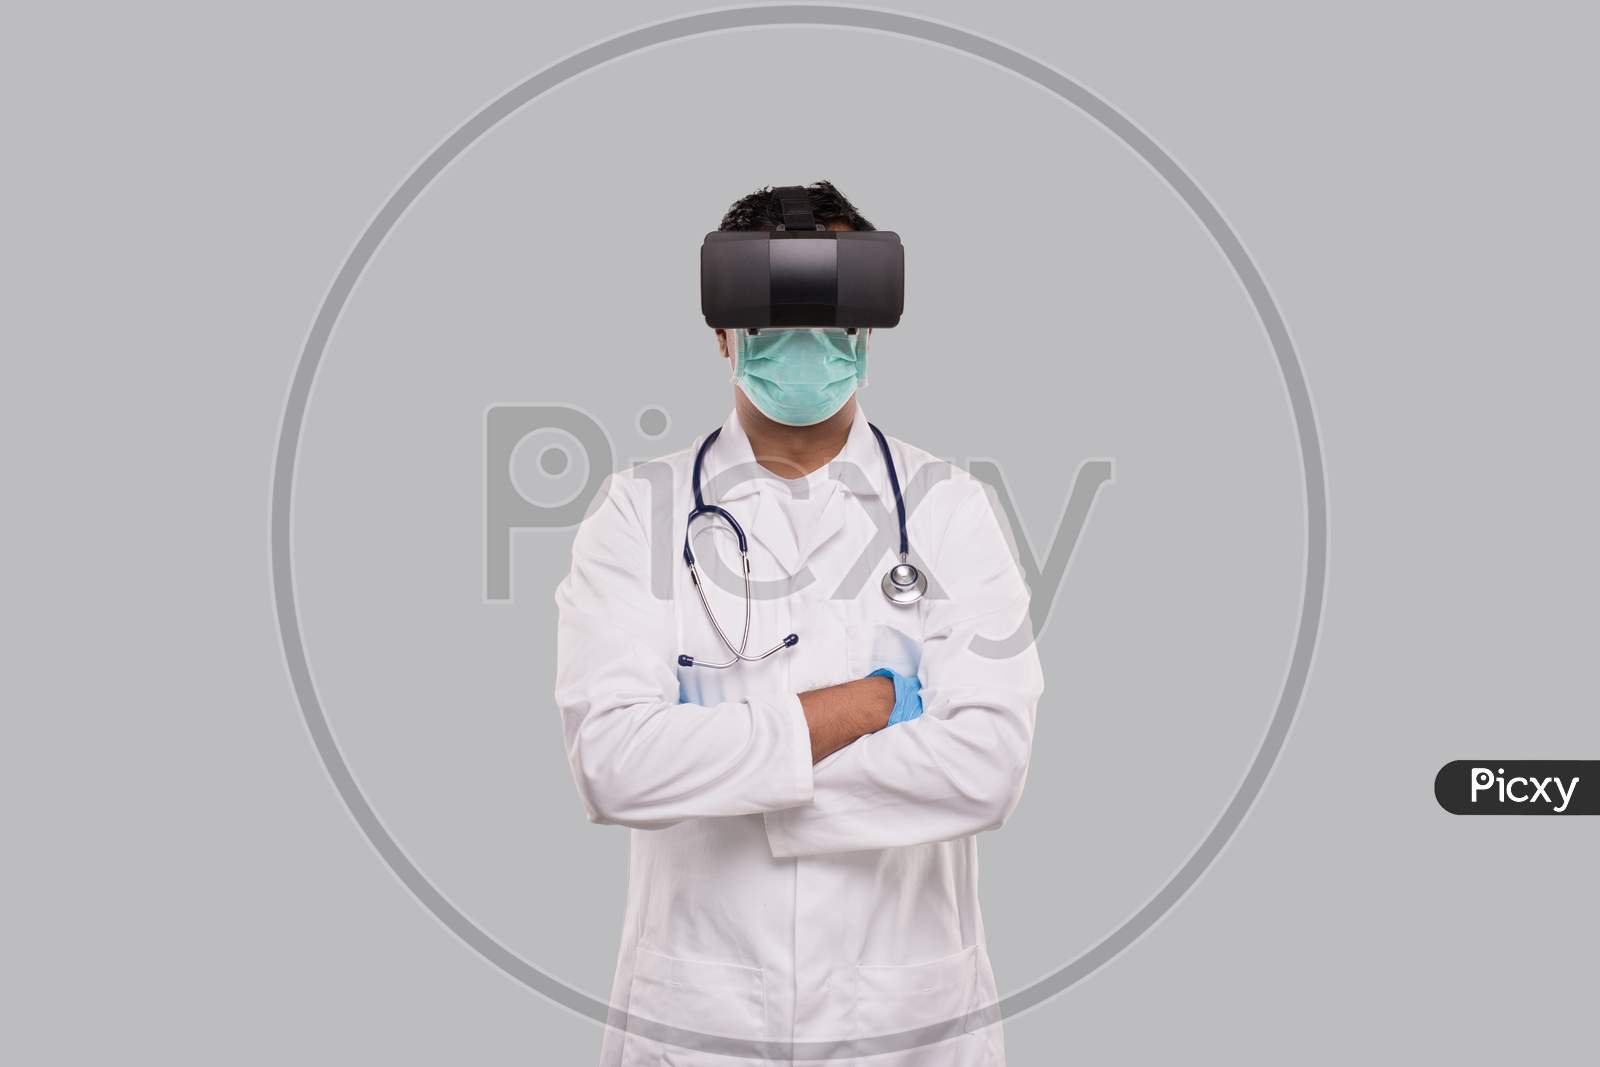 Doctor Wearing Vr Glasses, Medical Mask And Gloves Hands Grossed Isolated. Indian Man Doctor Online Medicine